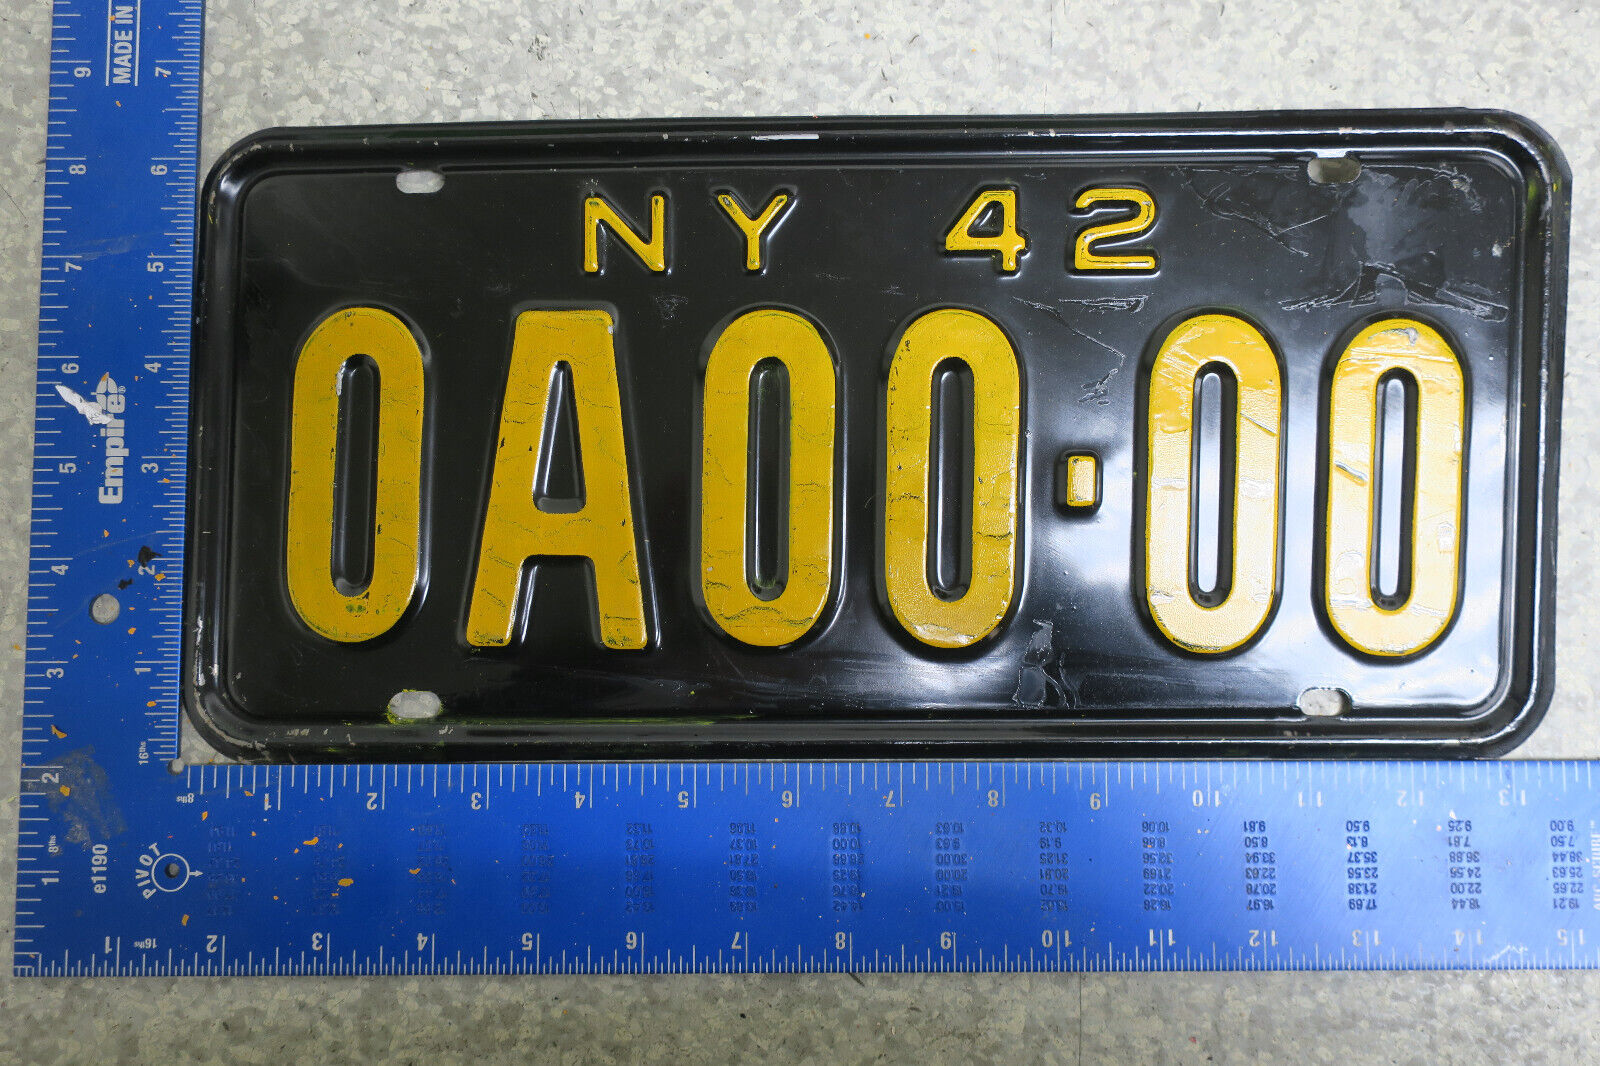 New York License Plate Sample NY 1942 Tag # 0A00-00 42